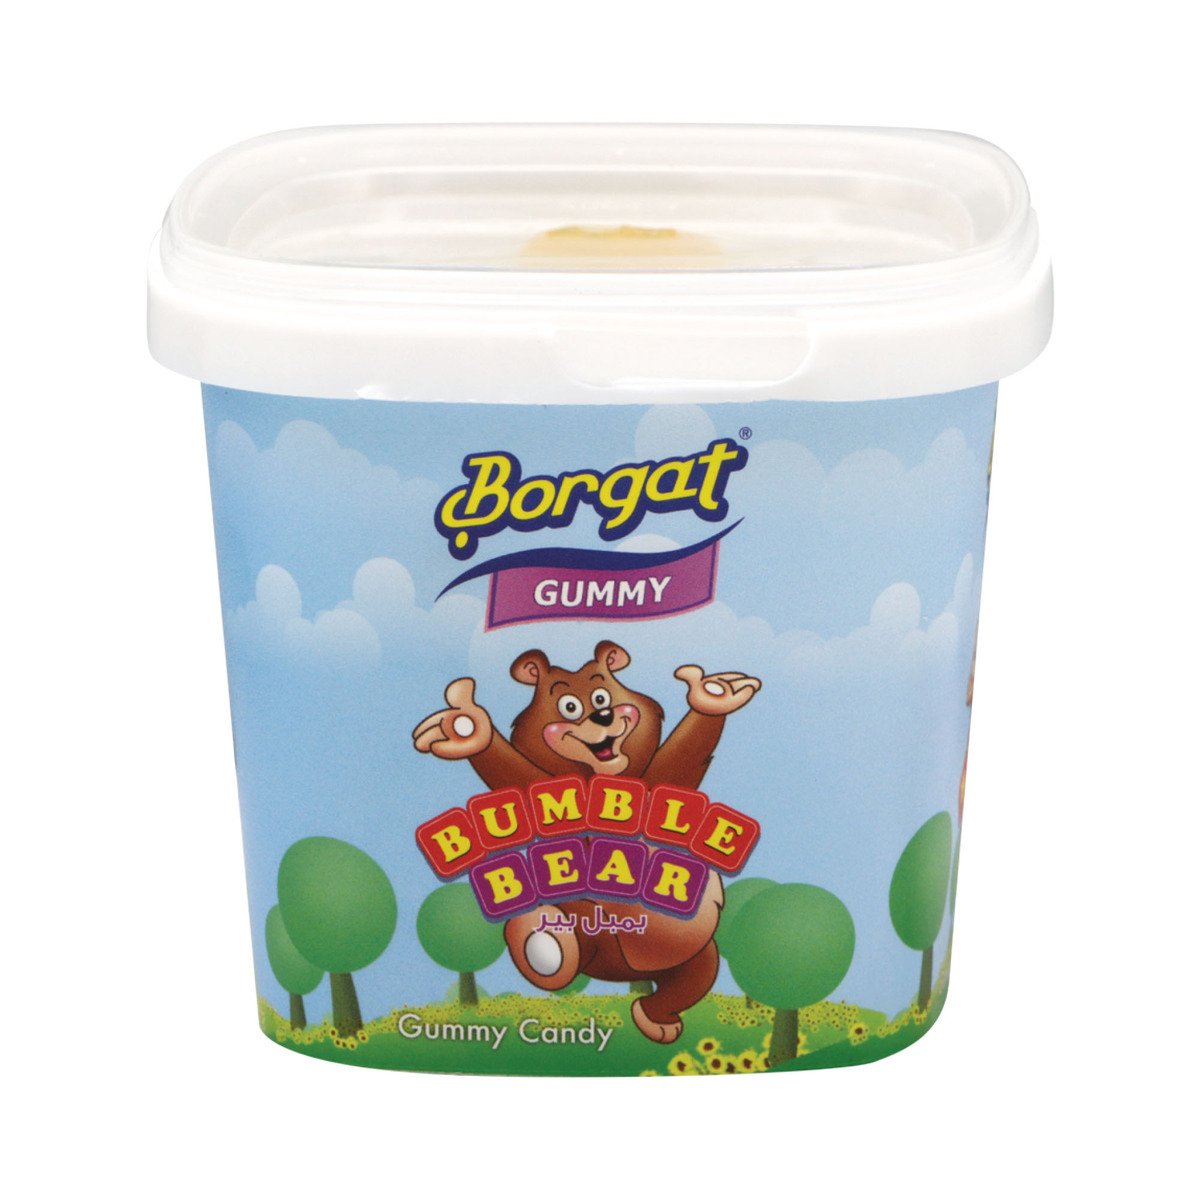 Borgat Bumble Bear Gummy Candy Tub 160 g